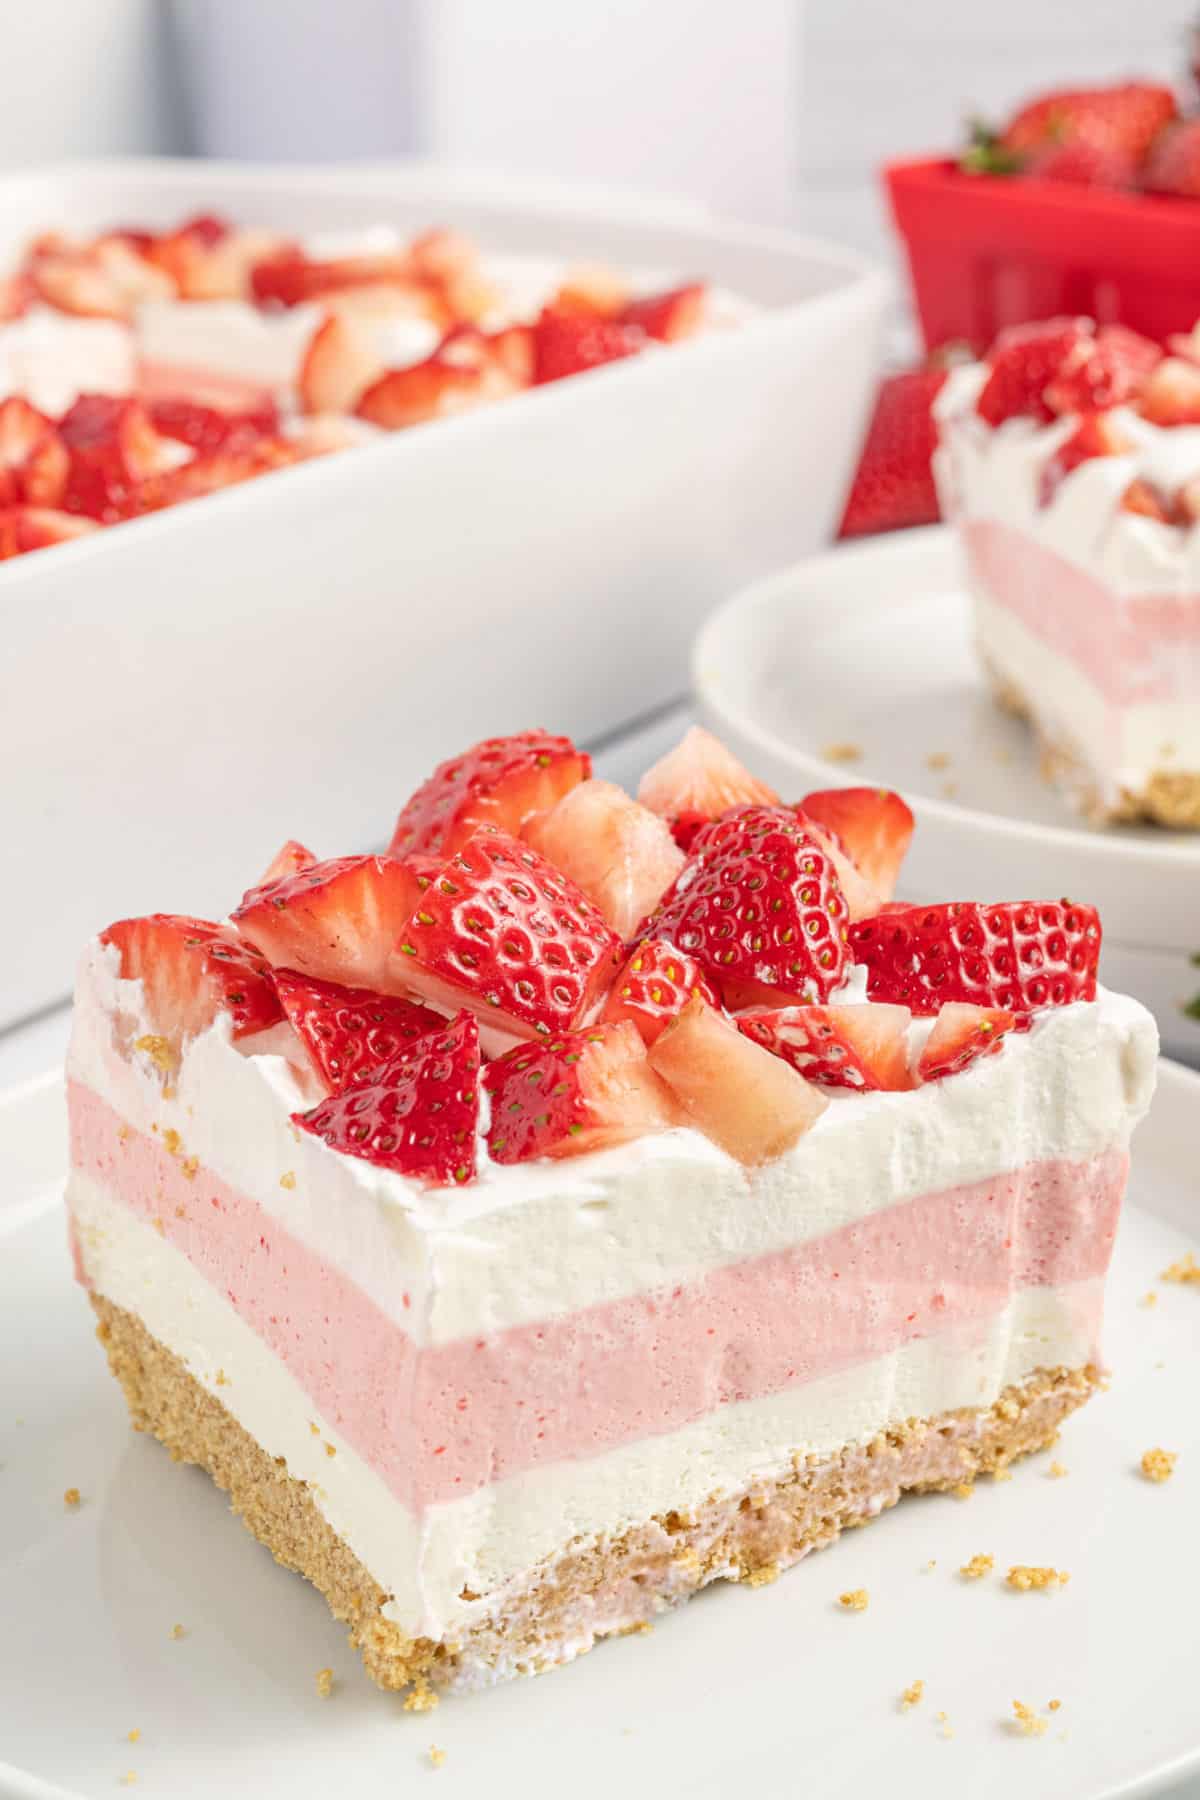 Slice of no bake layered strawberry dessert.